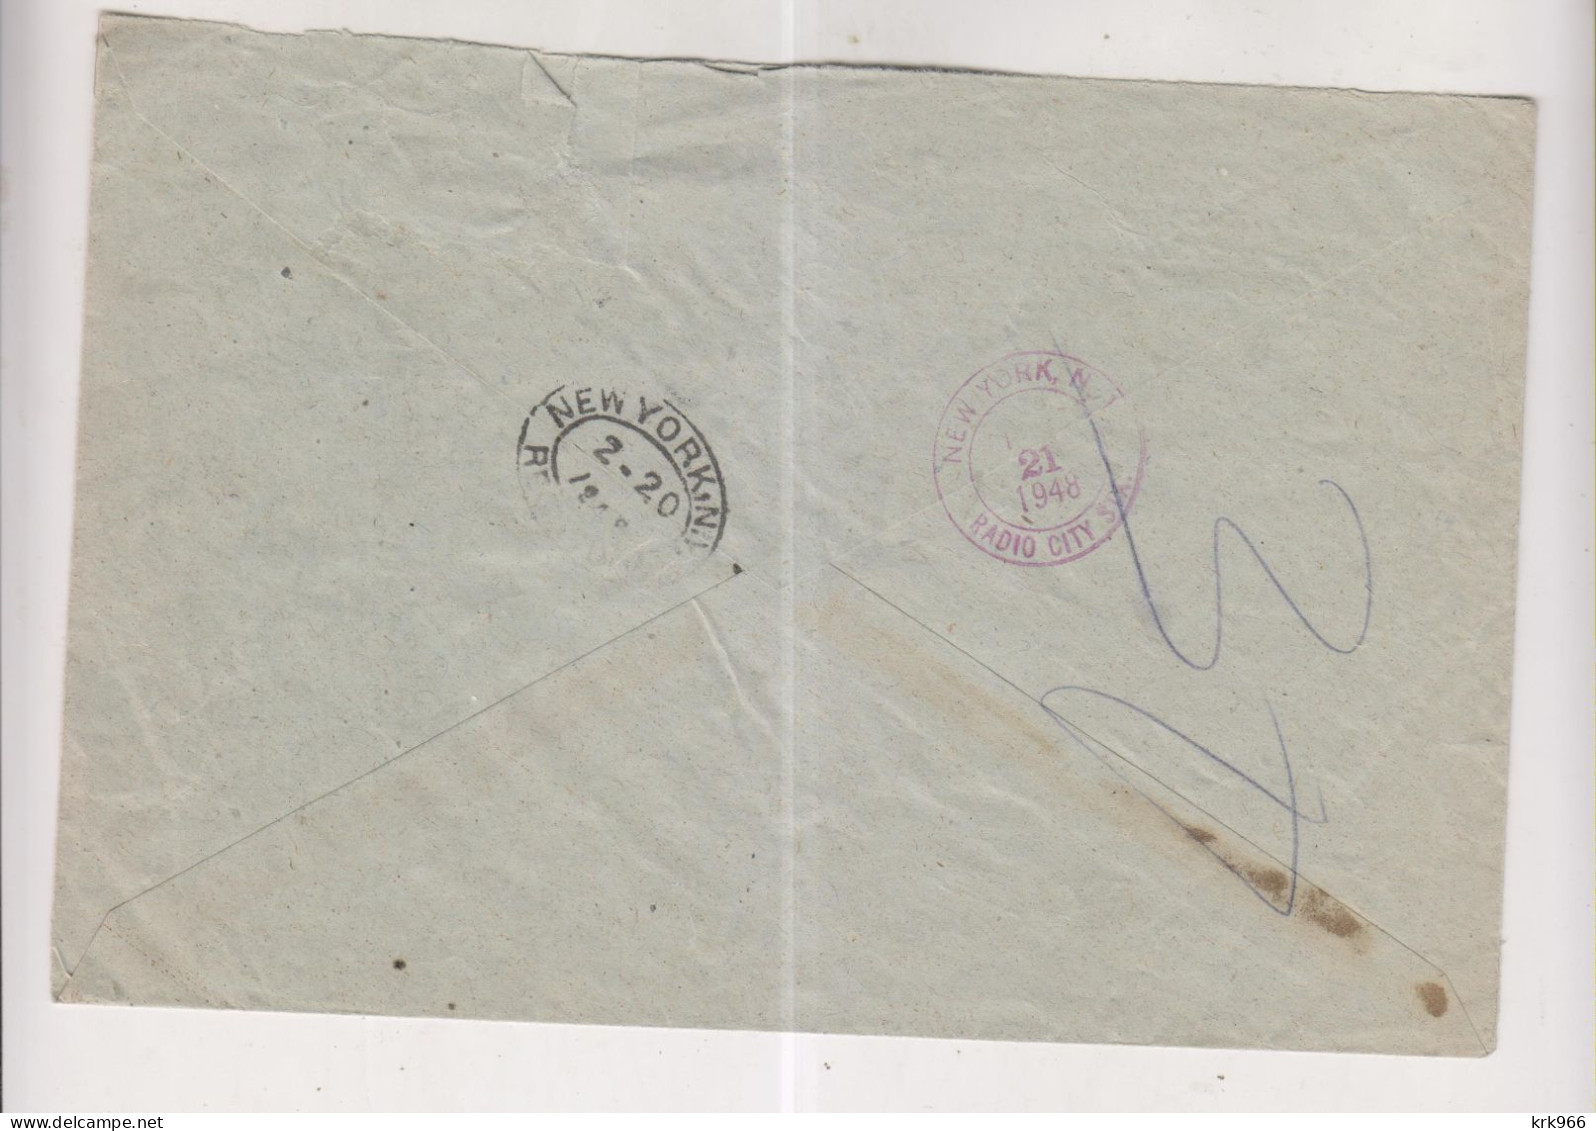 YUGOSLAVIA,1948 BEOGRAD Registered Airmail Cover To United States - Cartas & Documentos